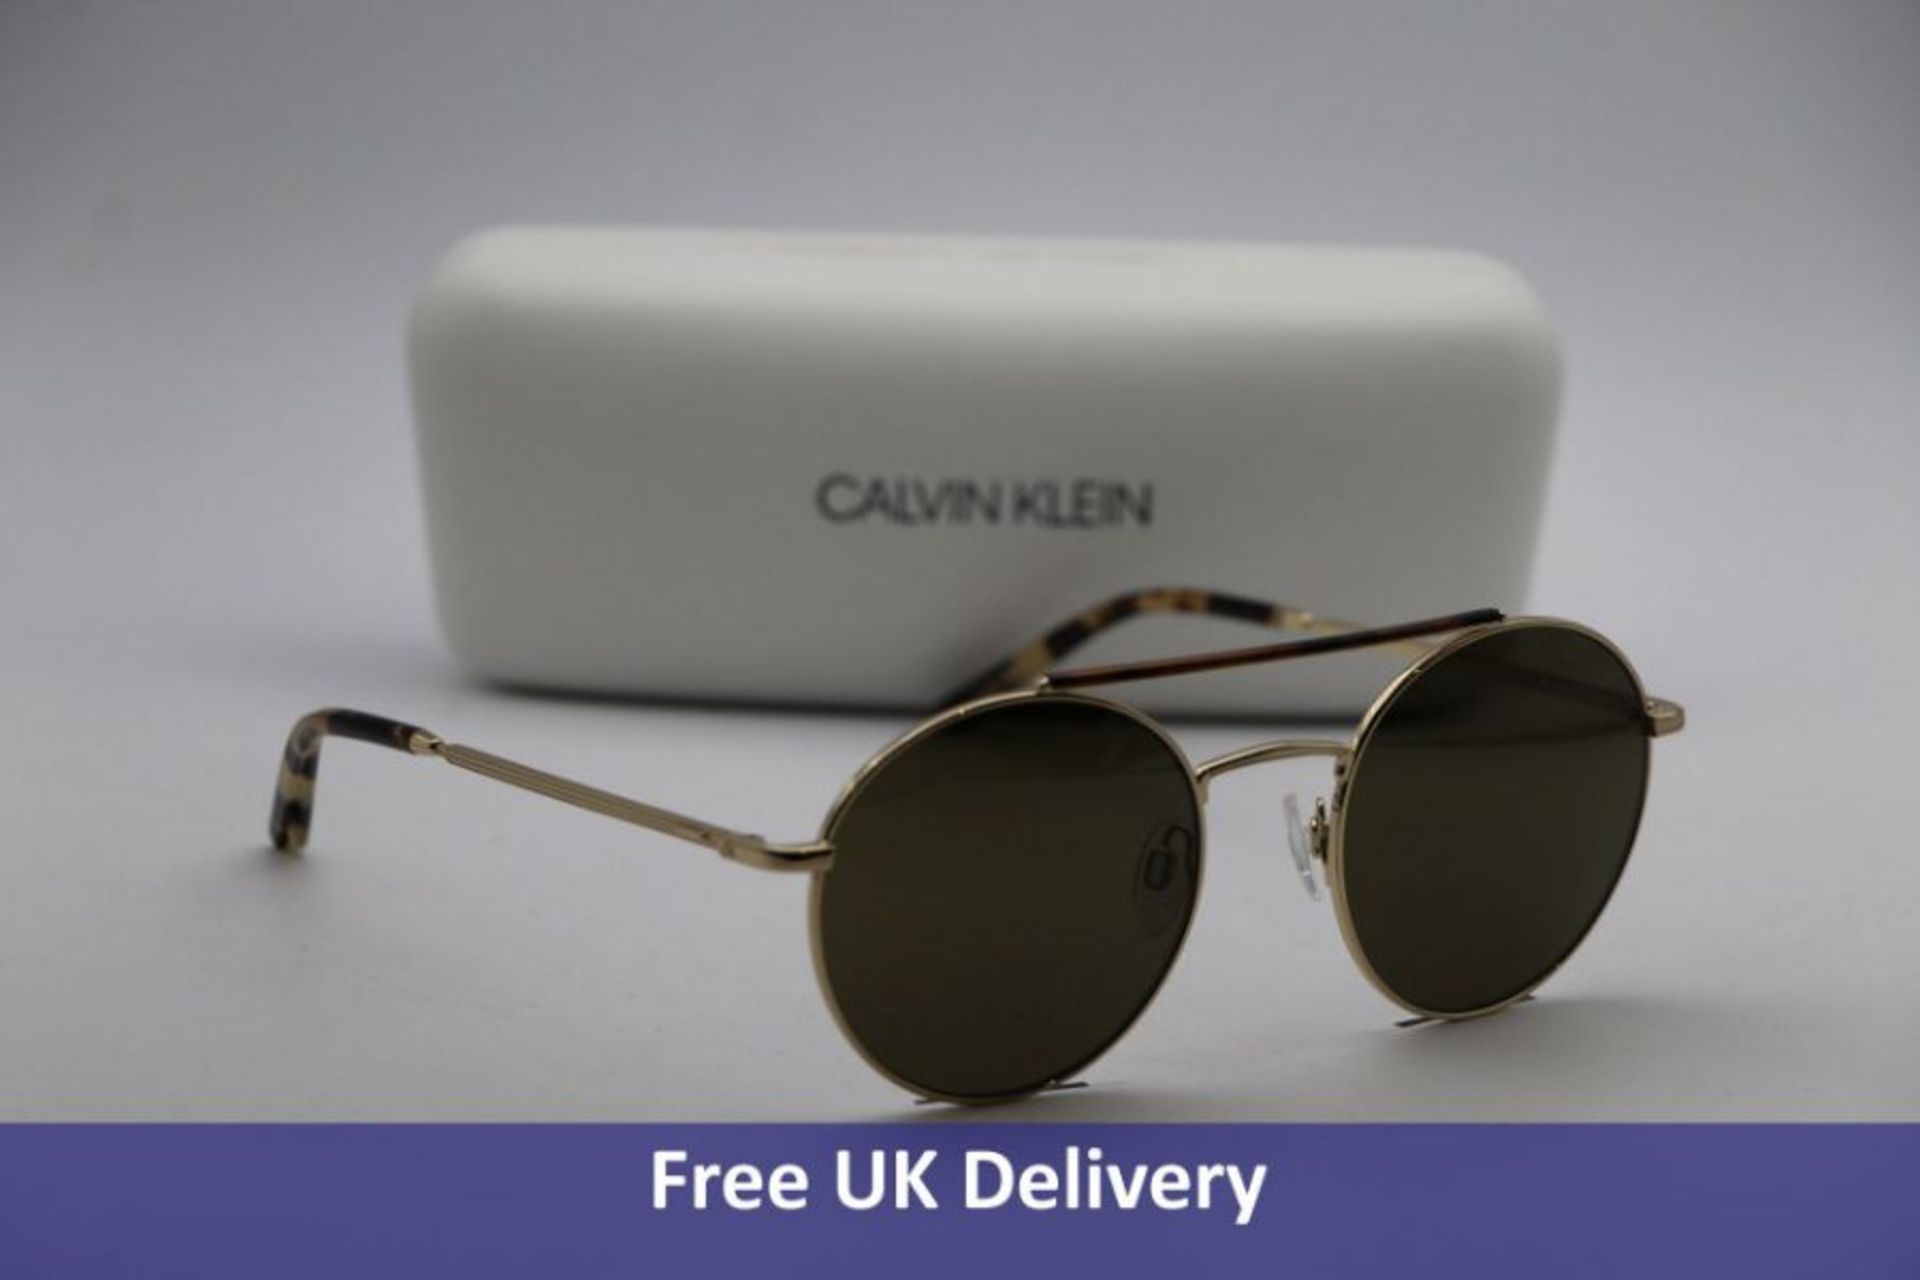 Calvin Klein Eyewear Sunglasses, Gold, Size 53